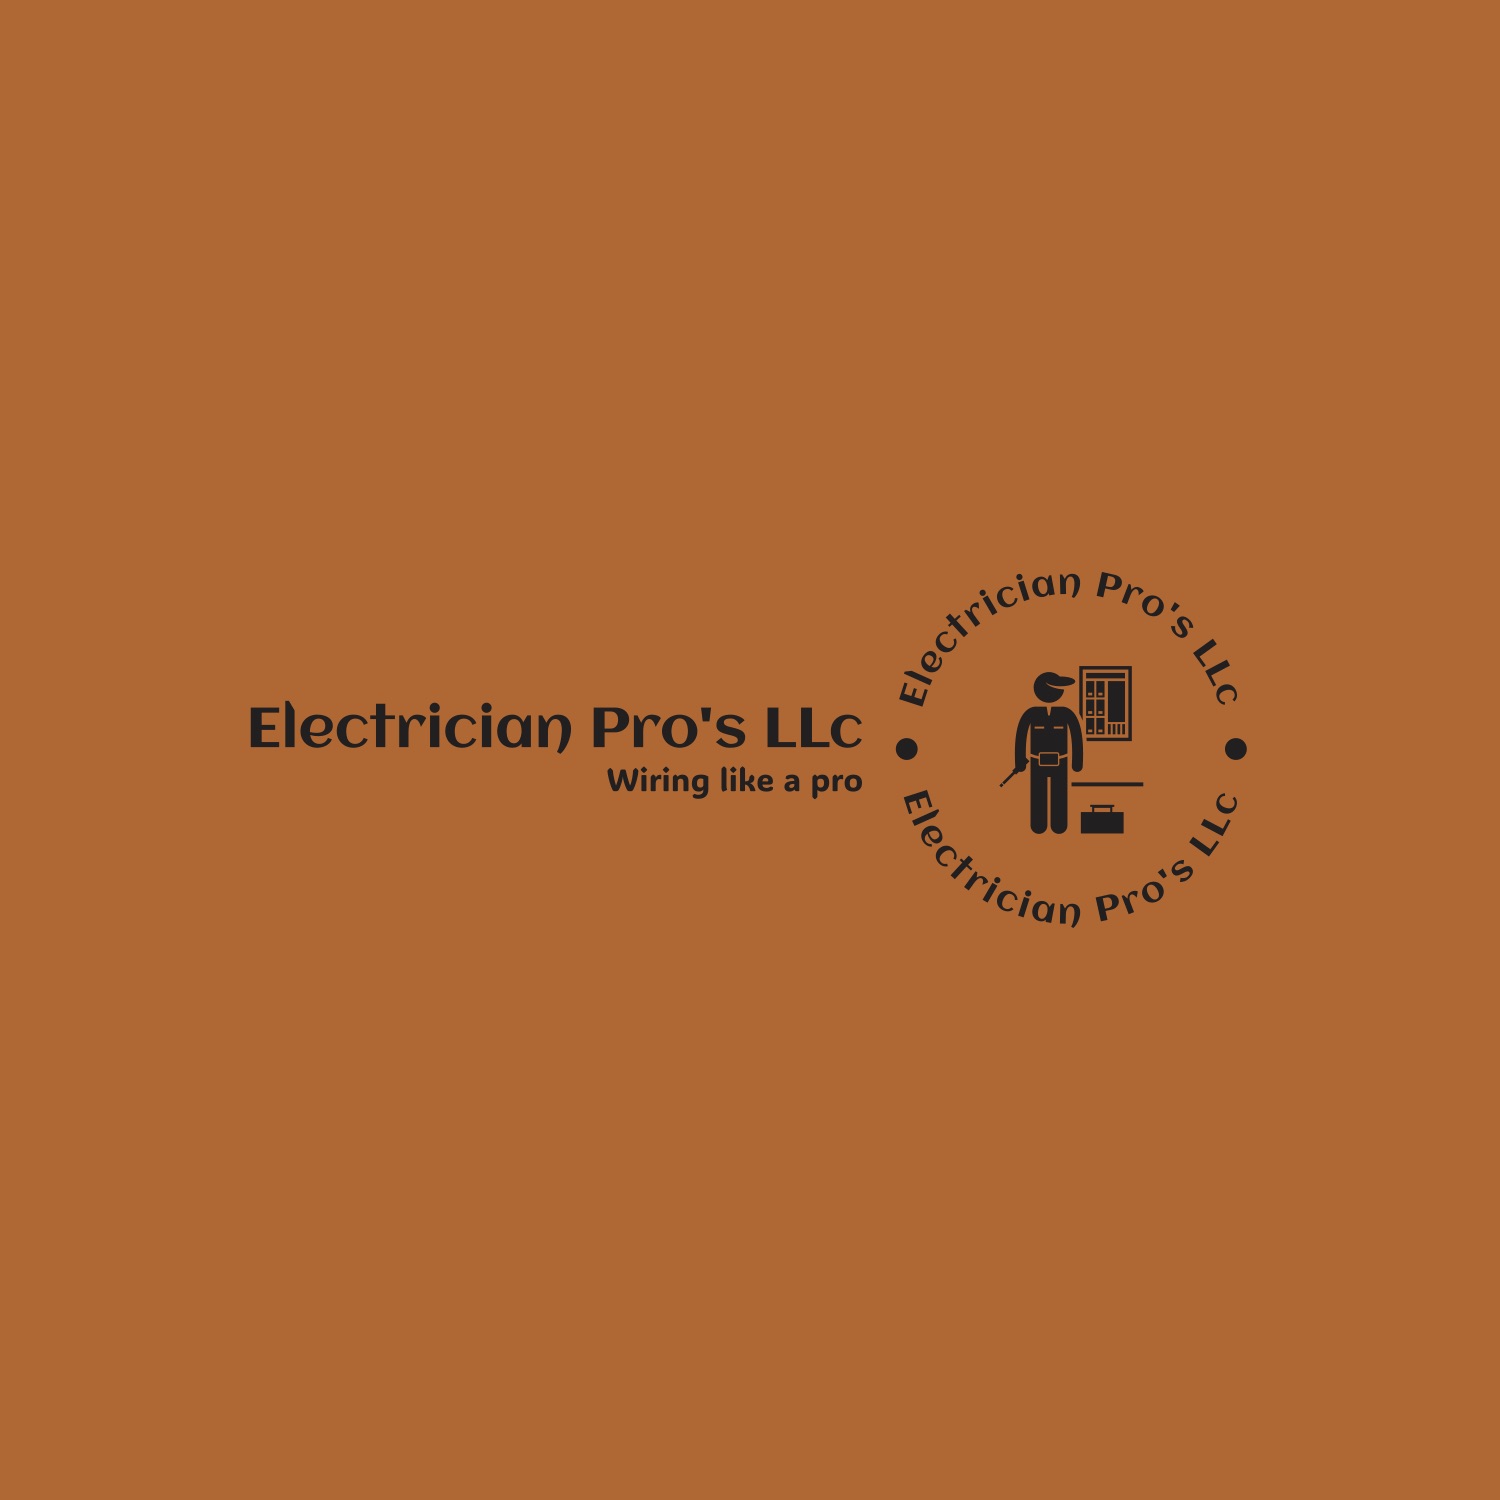 Electrician Pro's LLC